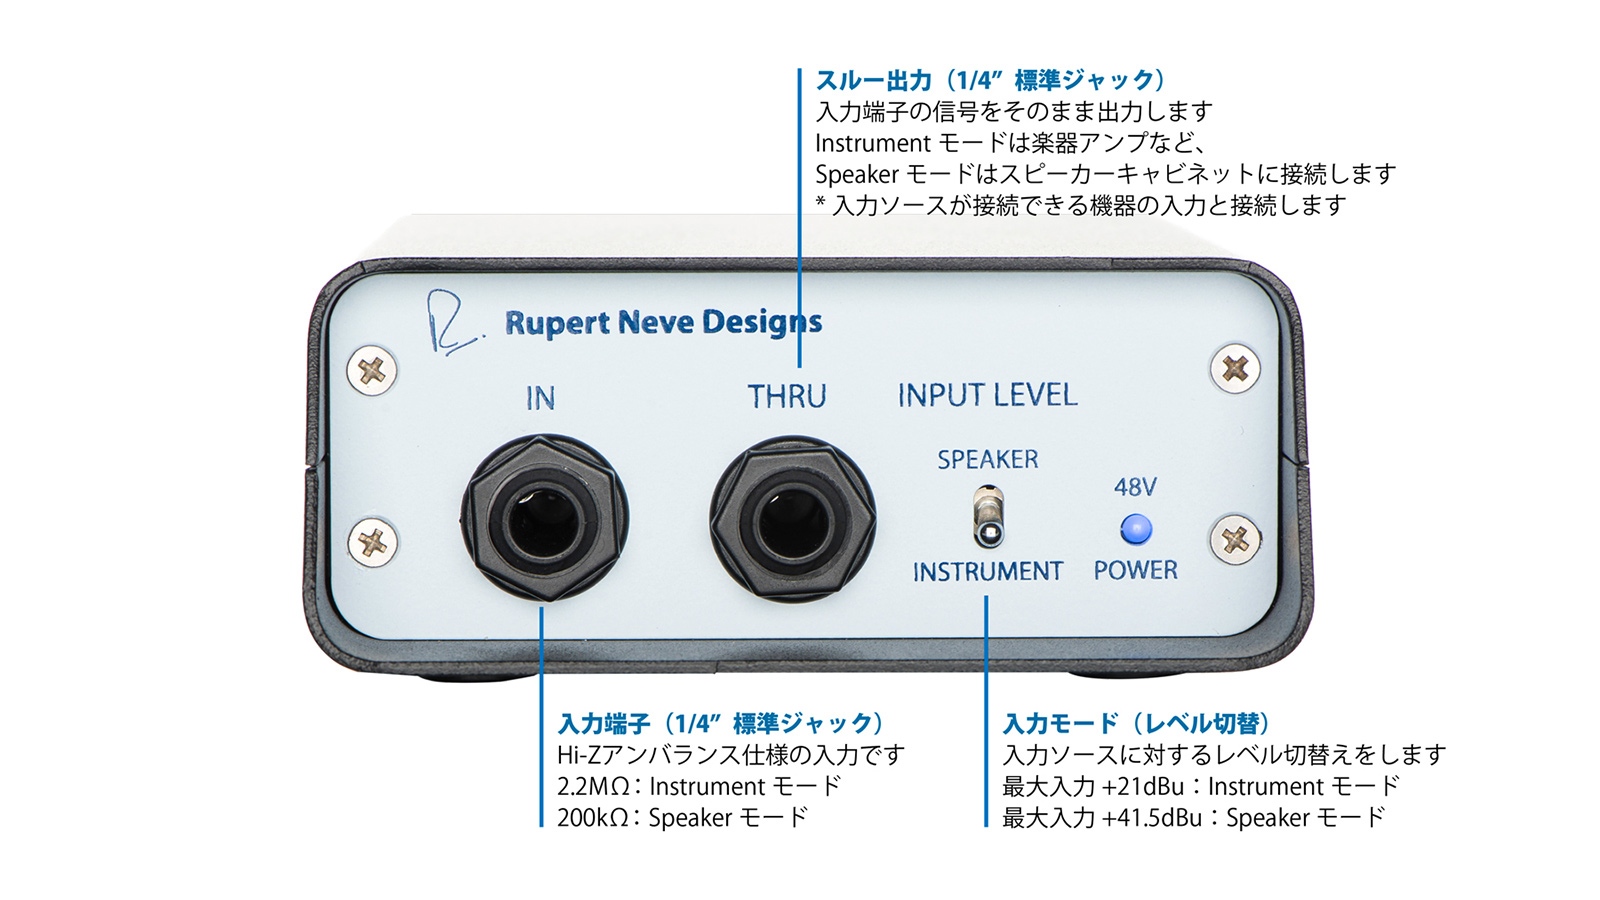 特長 | RNDI - Rupert Neve Designs | Hookup, Inc.